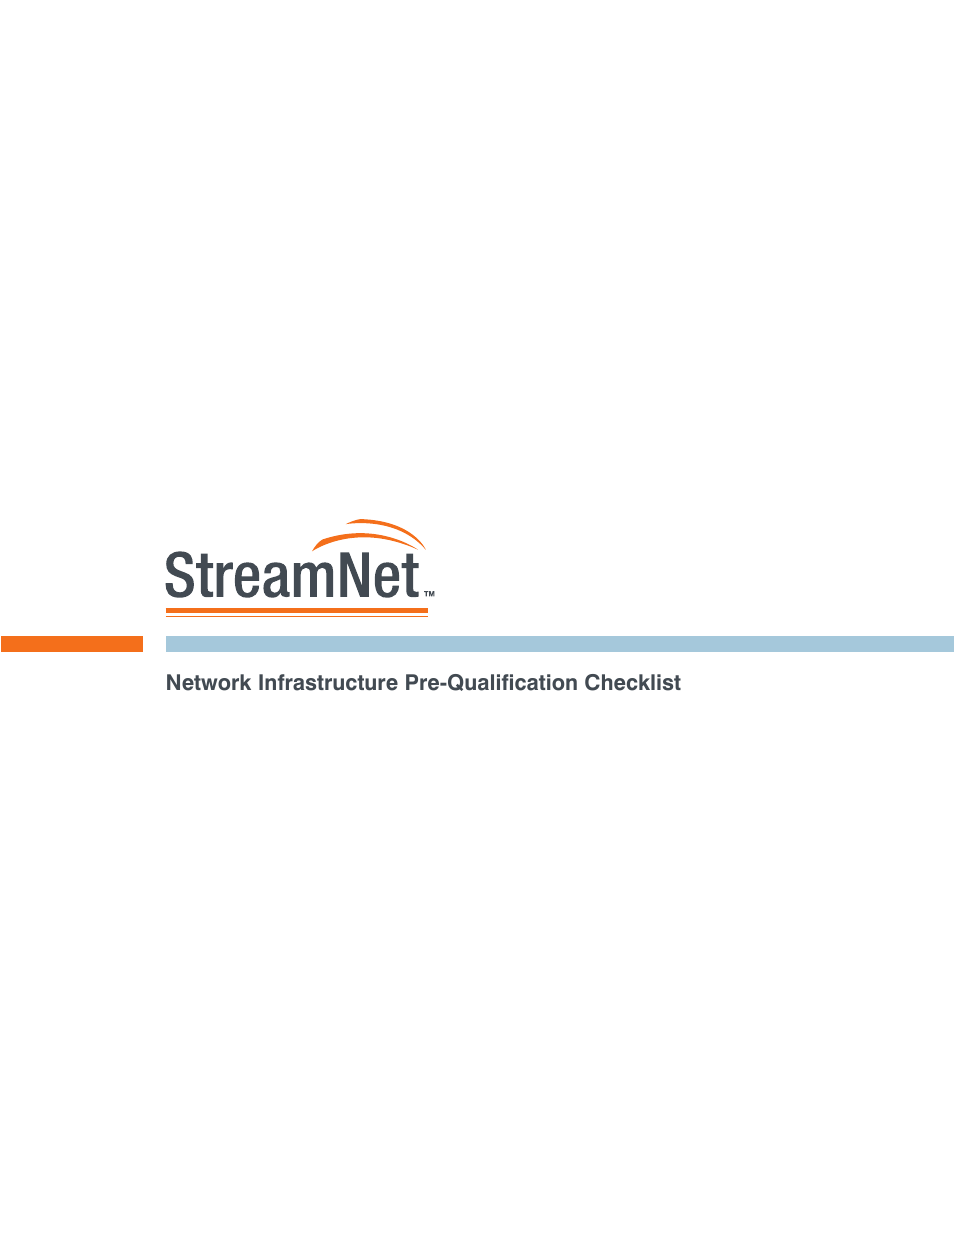 StreamNet Network Prequalification